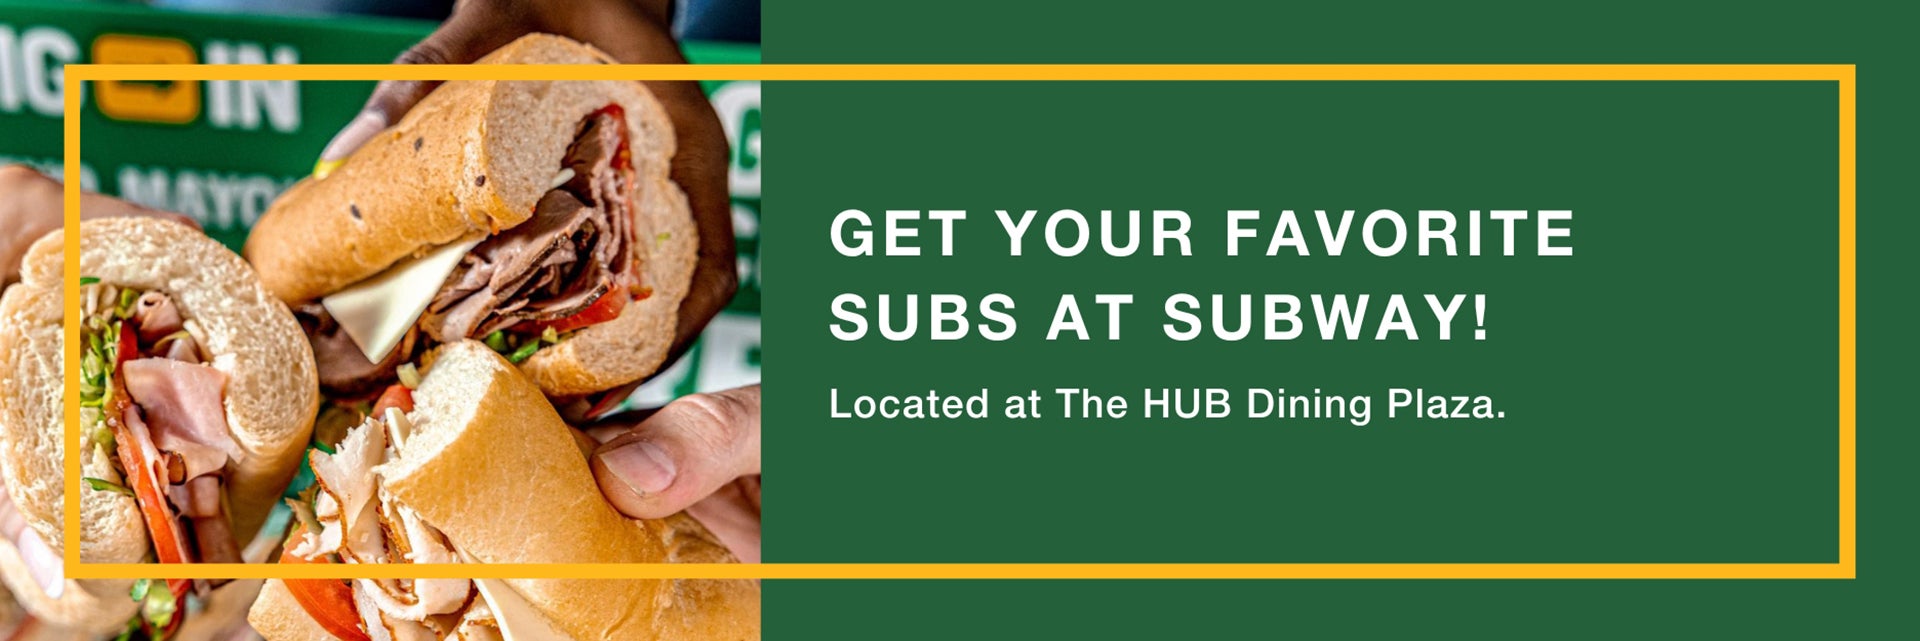 Get Your Favorite Subs at Subway at the HUB